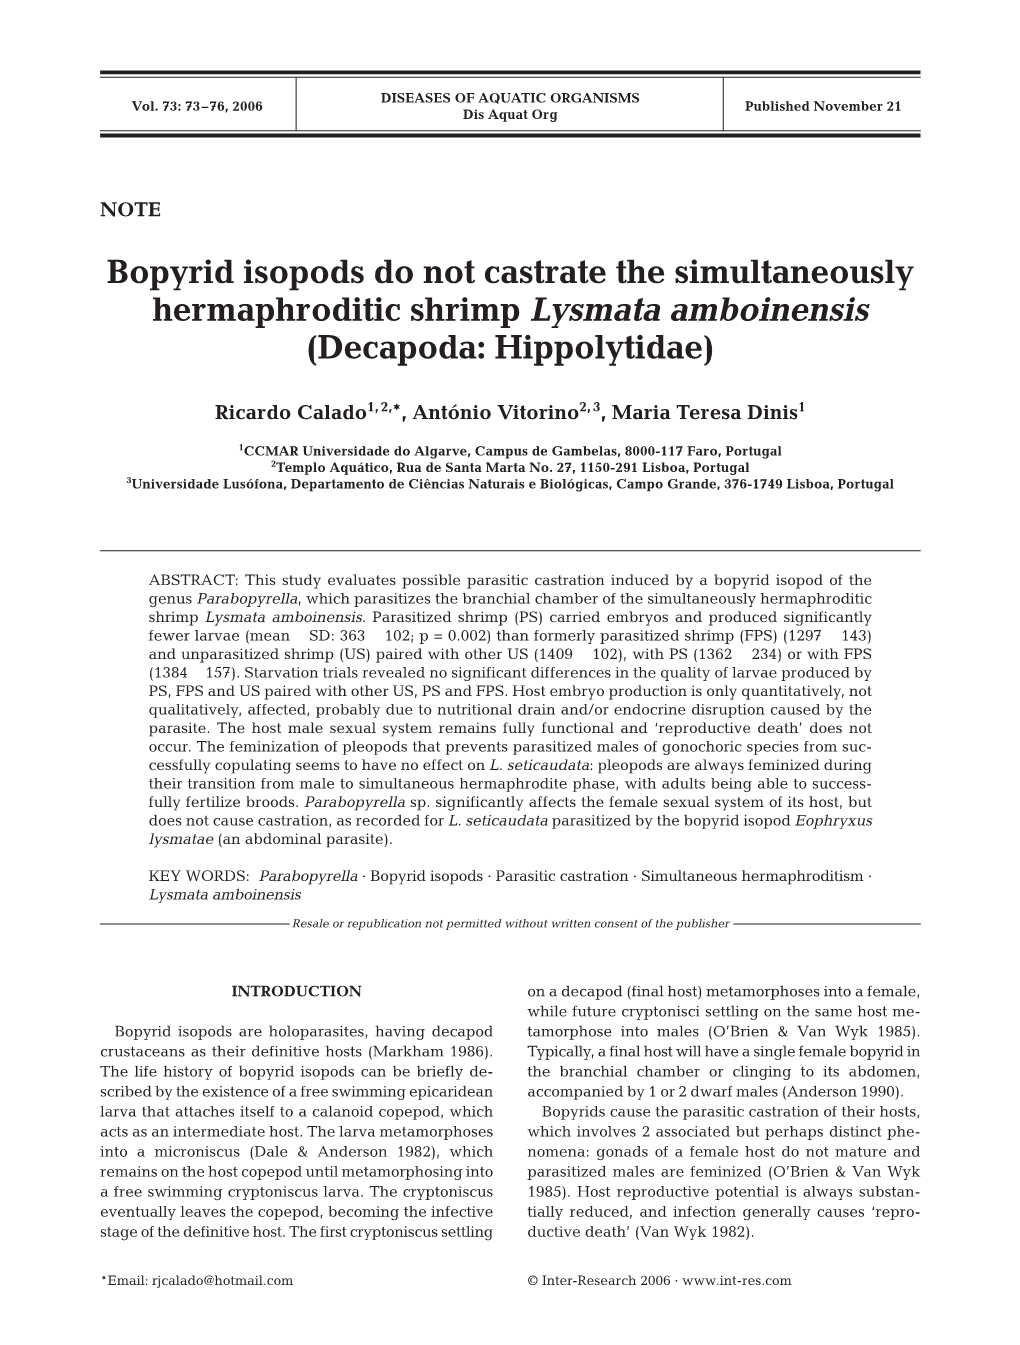 Bopyrid Isopods Do Not Castrate the Simultaneously Hermaphroditic Shrimp Lysmata Amboinensis (Decapoda: Hippolytidae)